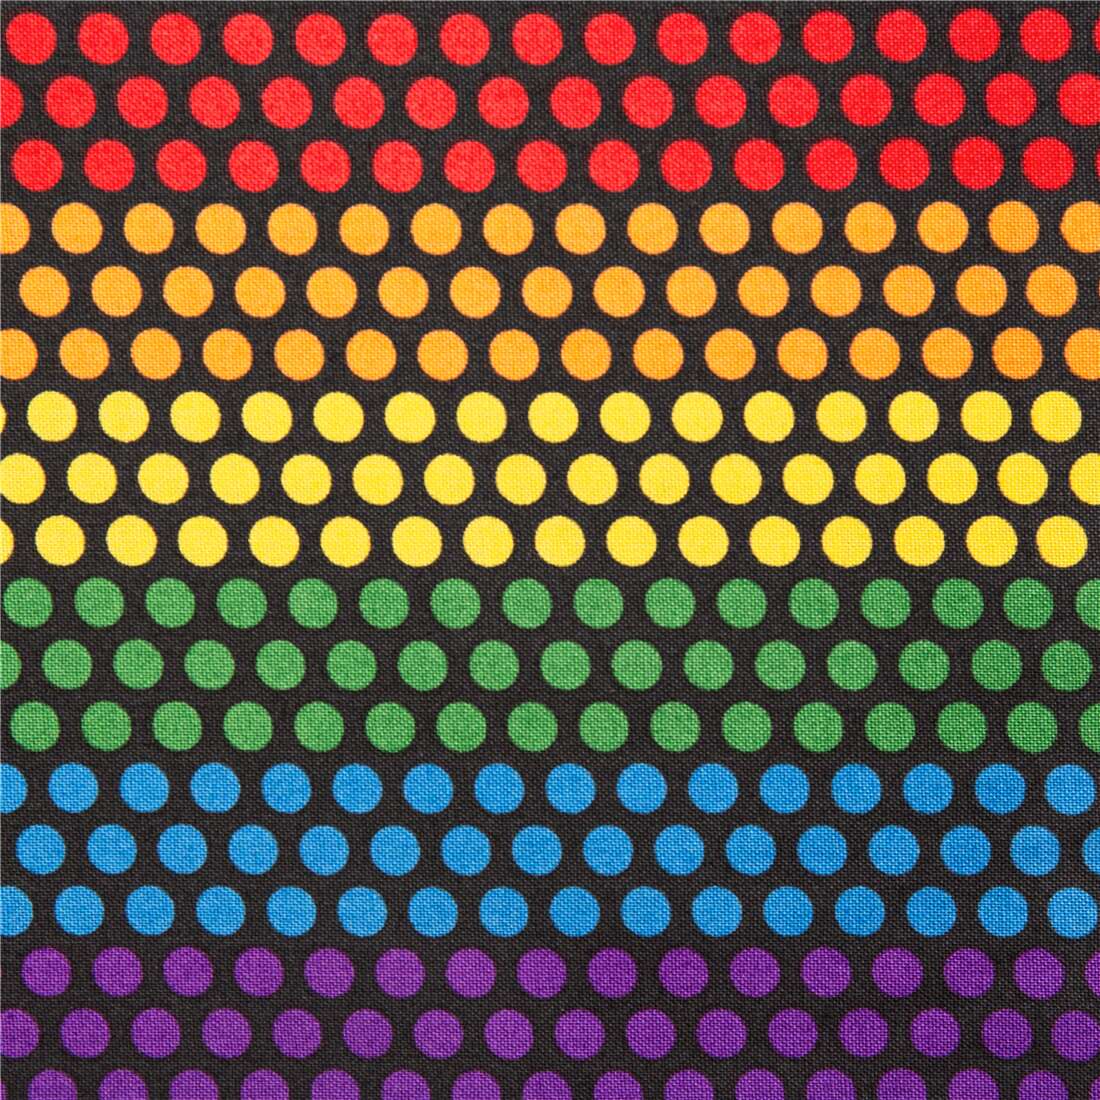 https://kawaii.kawaii.at/images/product_images/big_images/colourful-polka-dots-rows-Alexander-Henry-cotton-fabric-black-254722-1.jpg